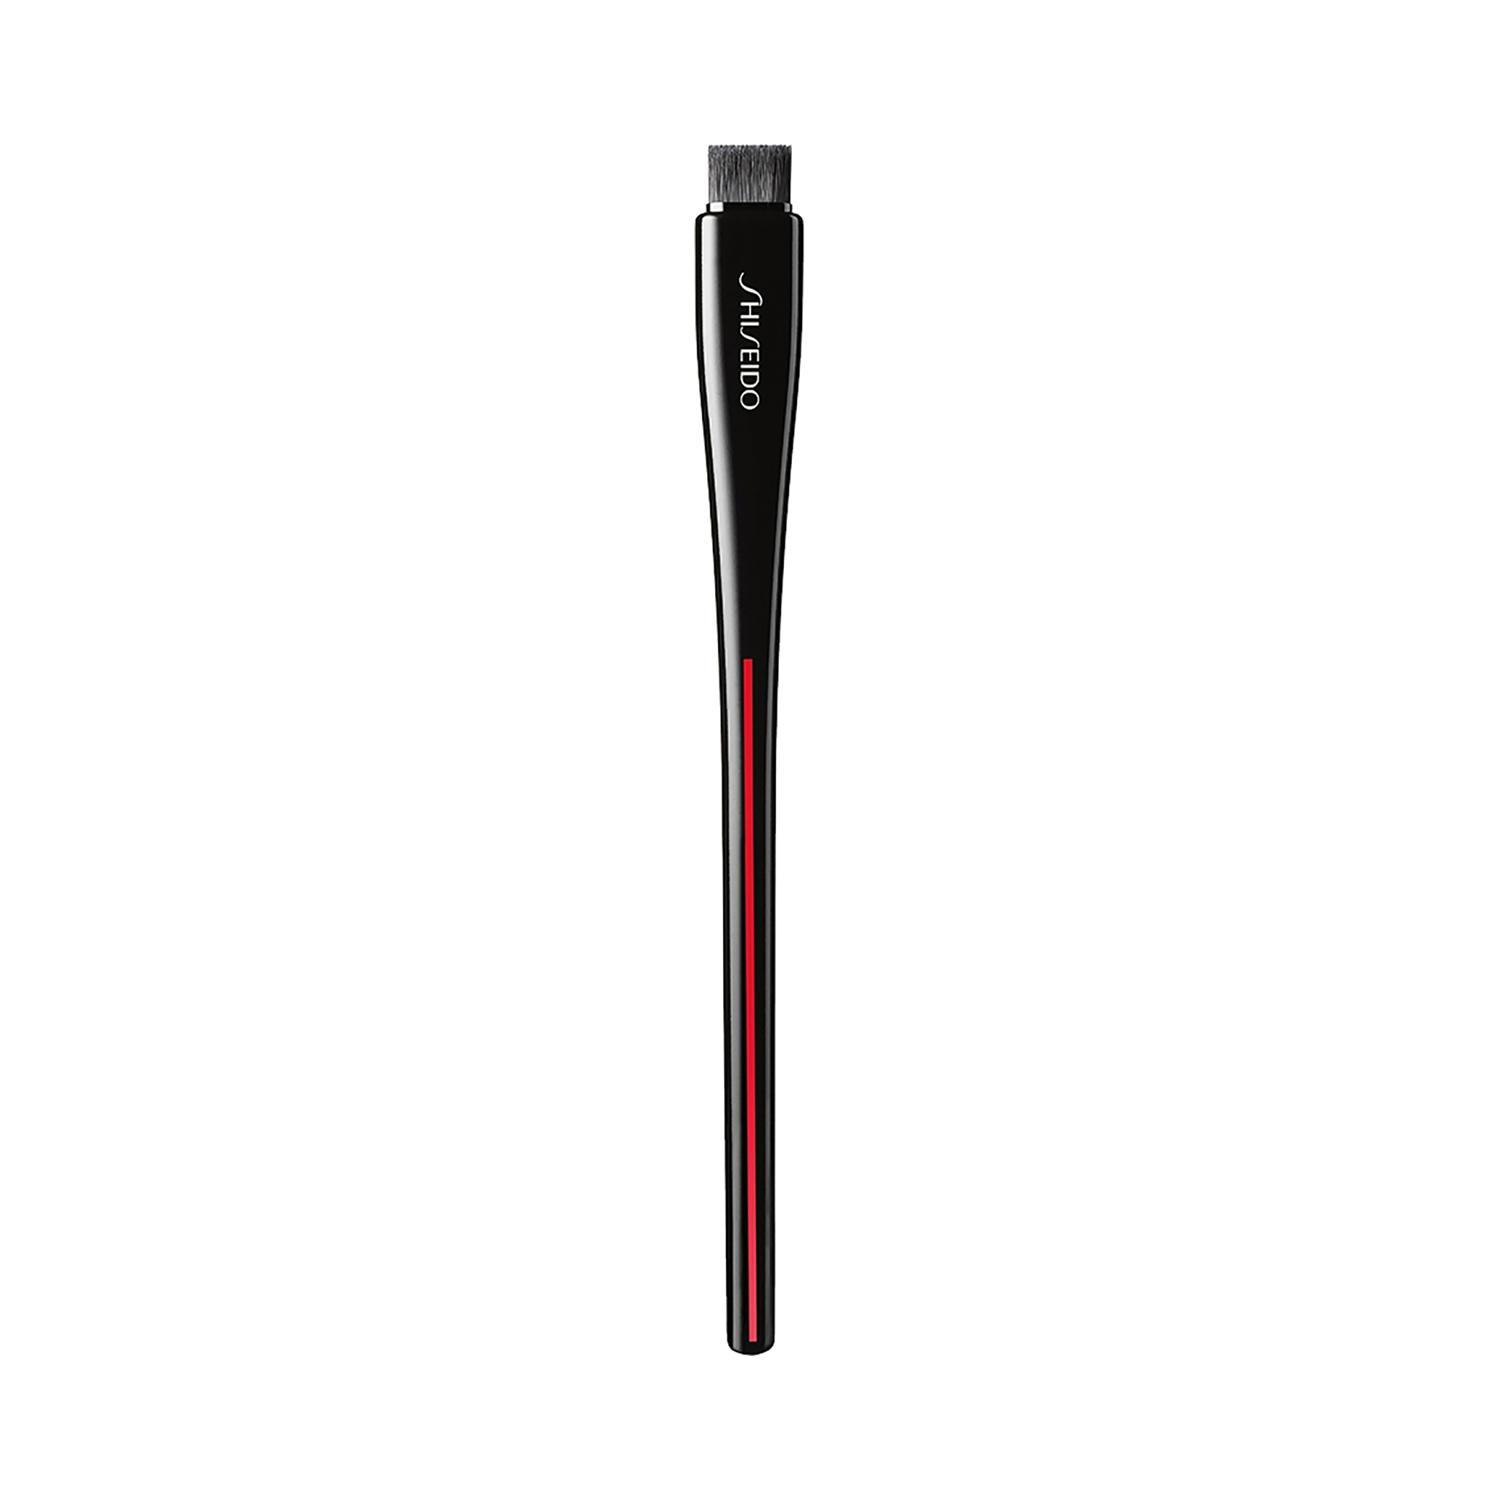 shiseido yane hake precision eye brush (1pc)